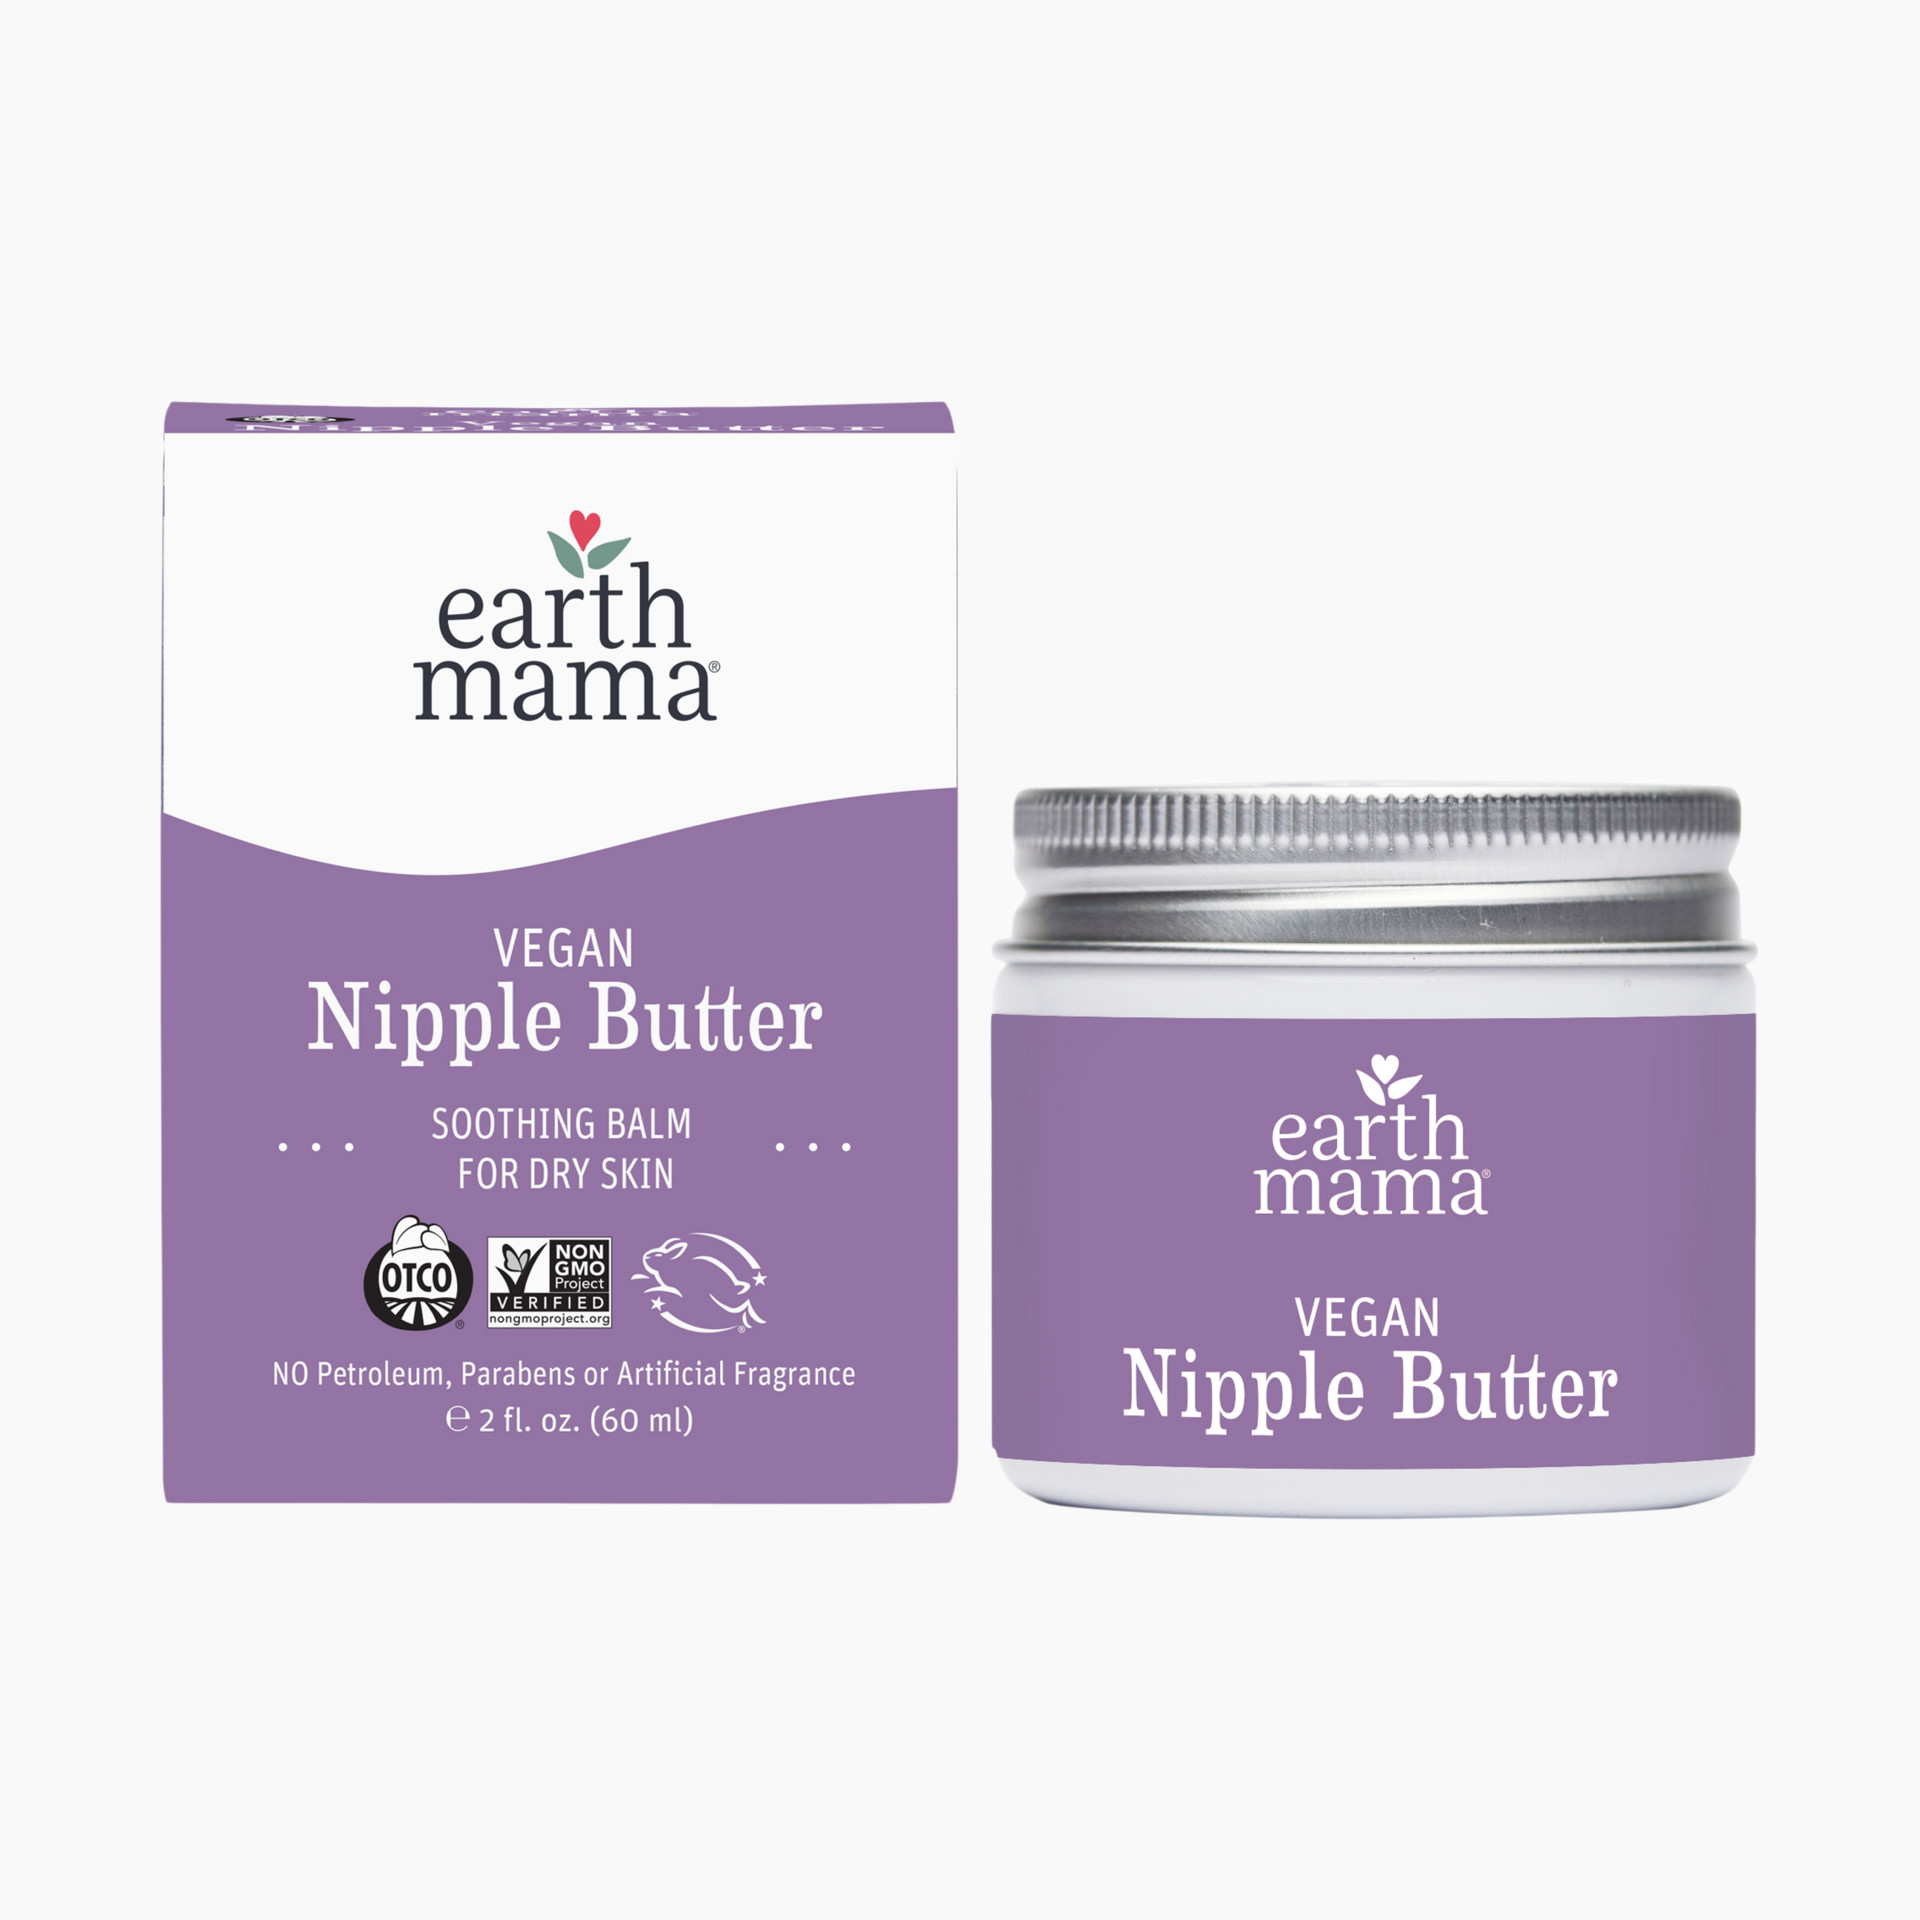 Nipple Butter